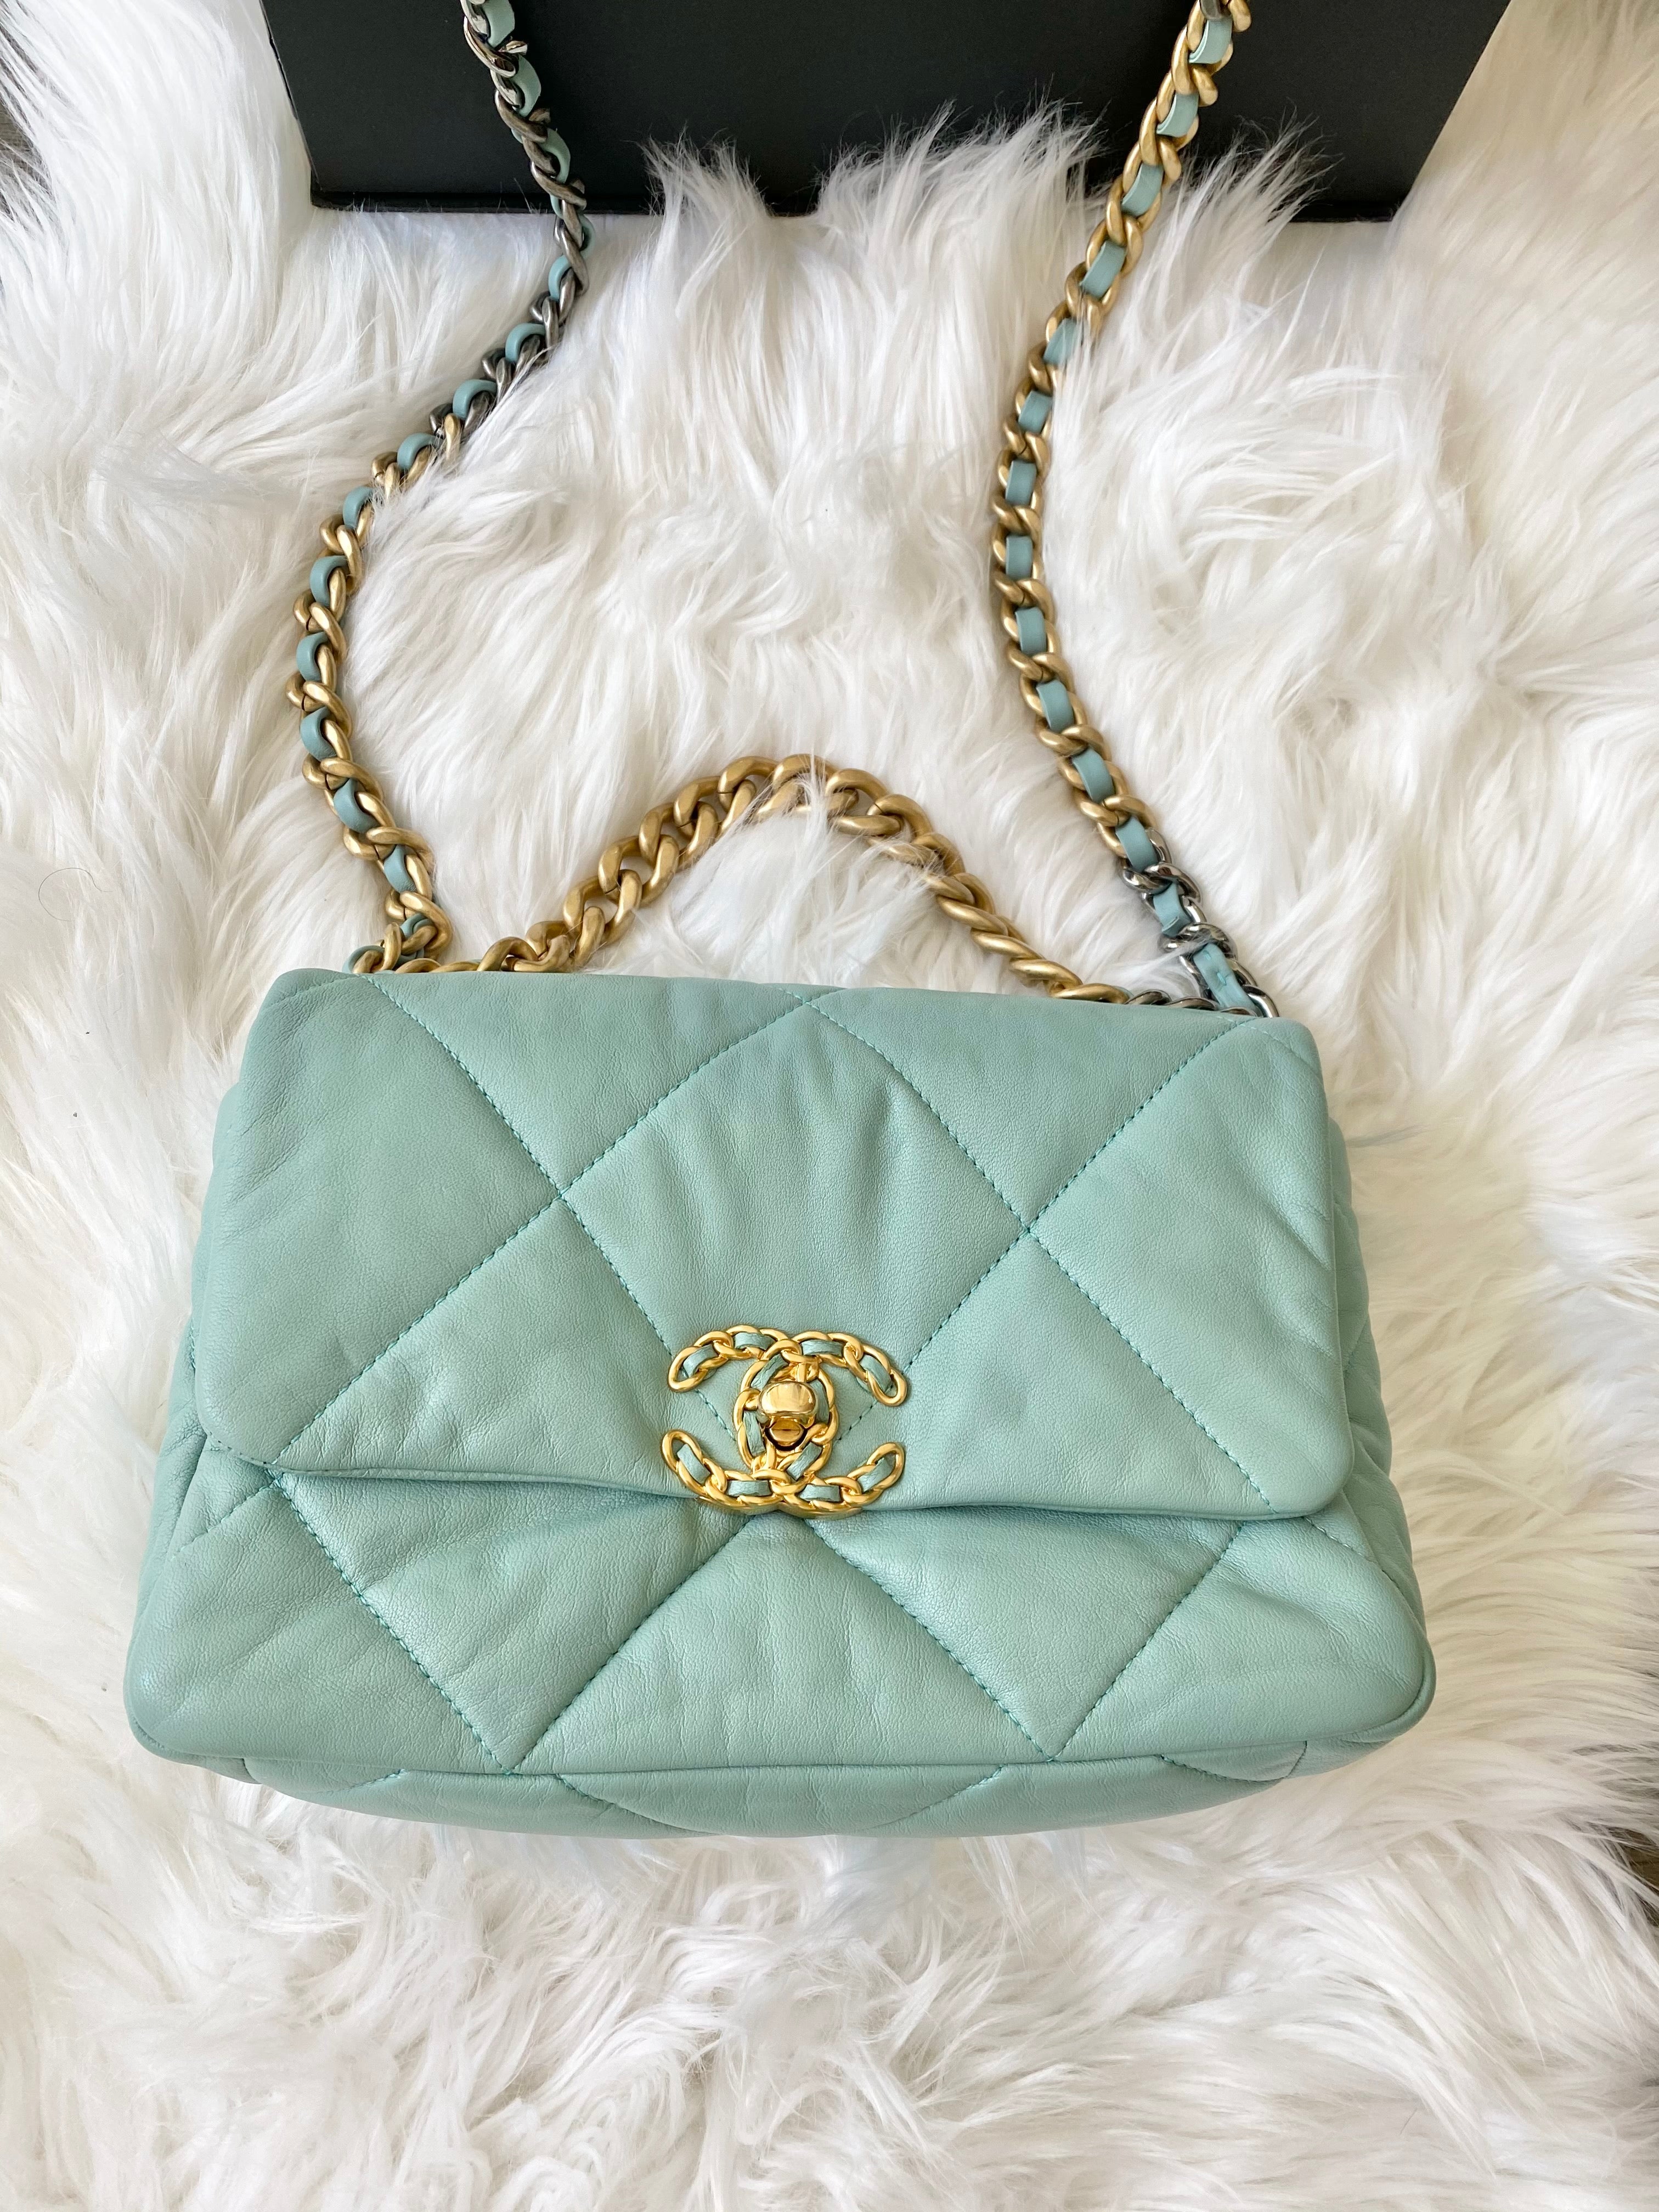 Chanel 19 bag – Beccas Bags